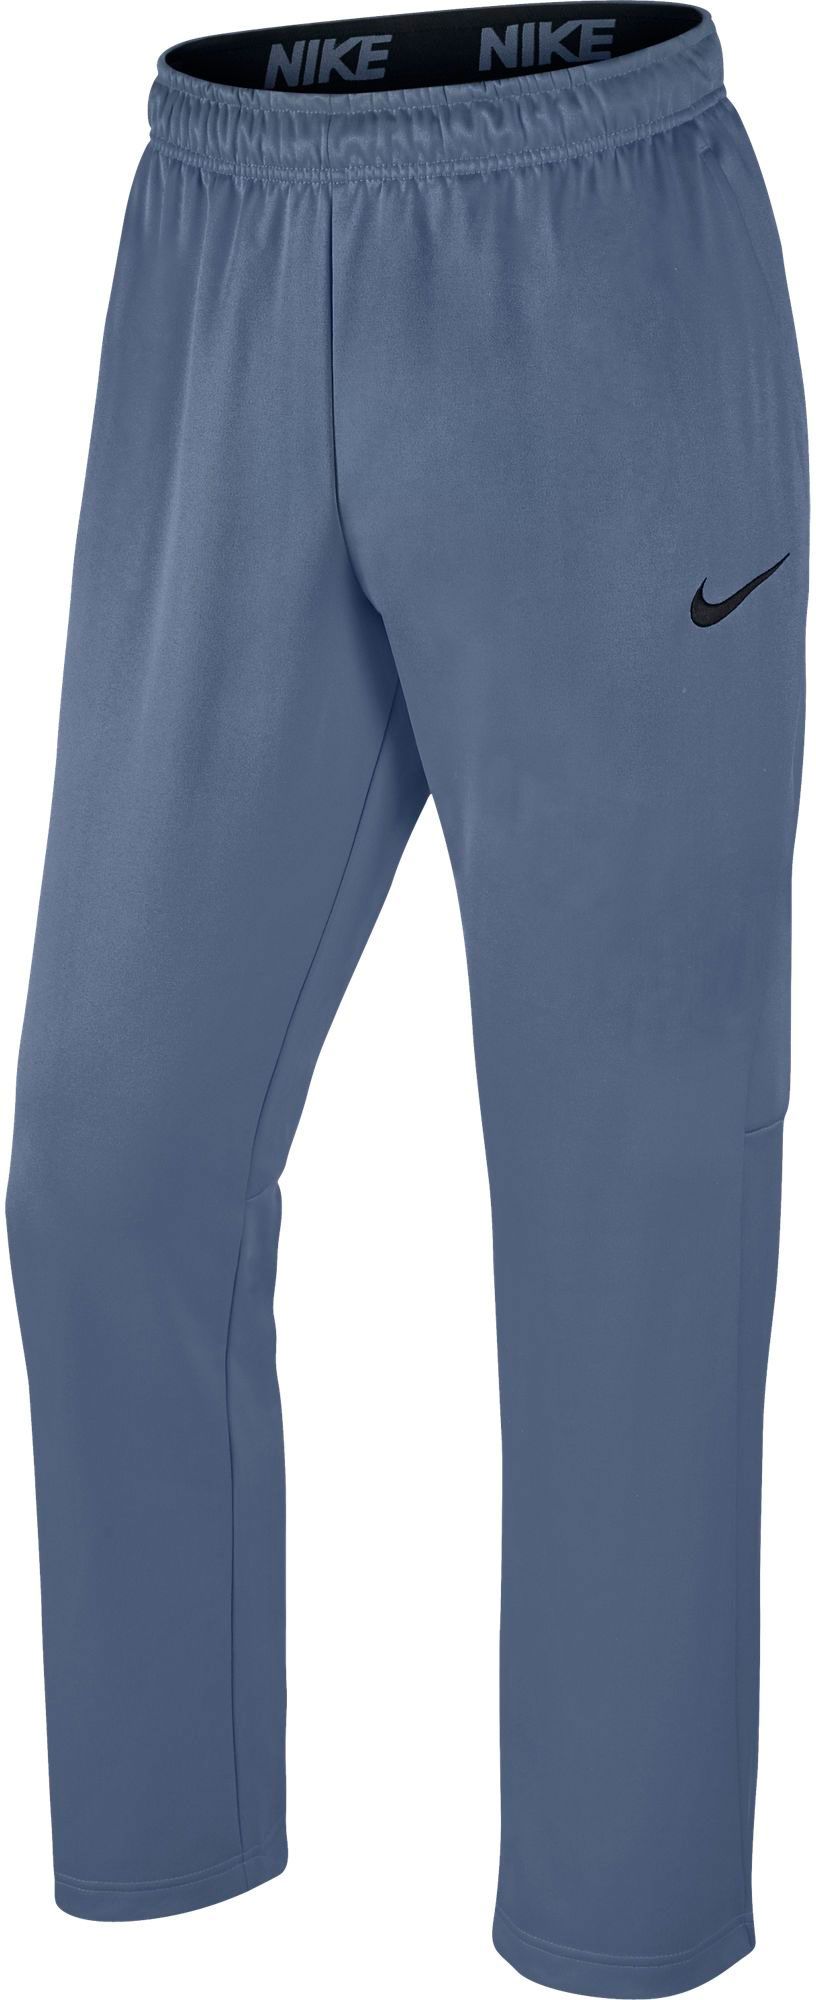 Men's Athletic Pants | DICK'S Sporting Goods